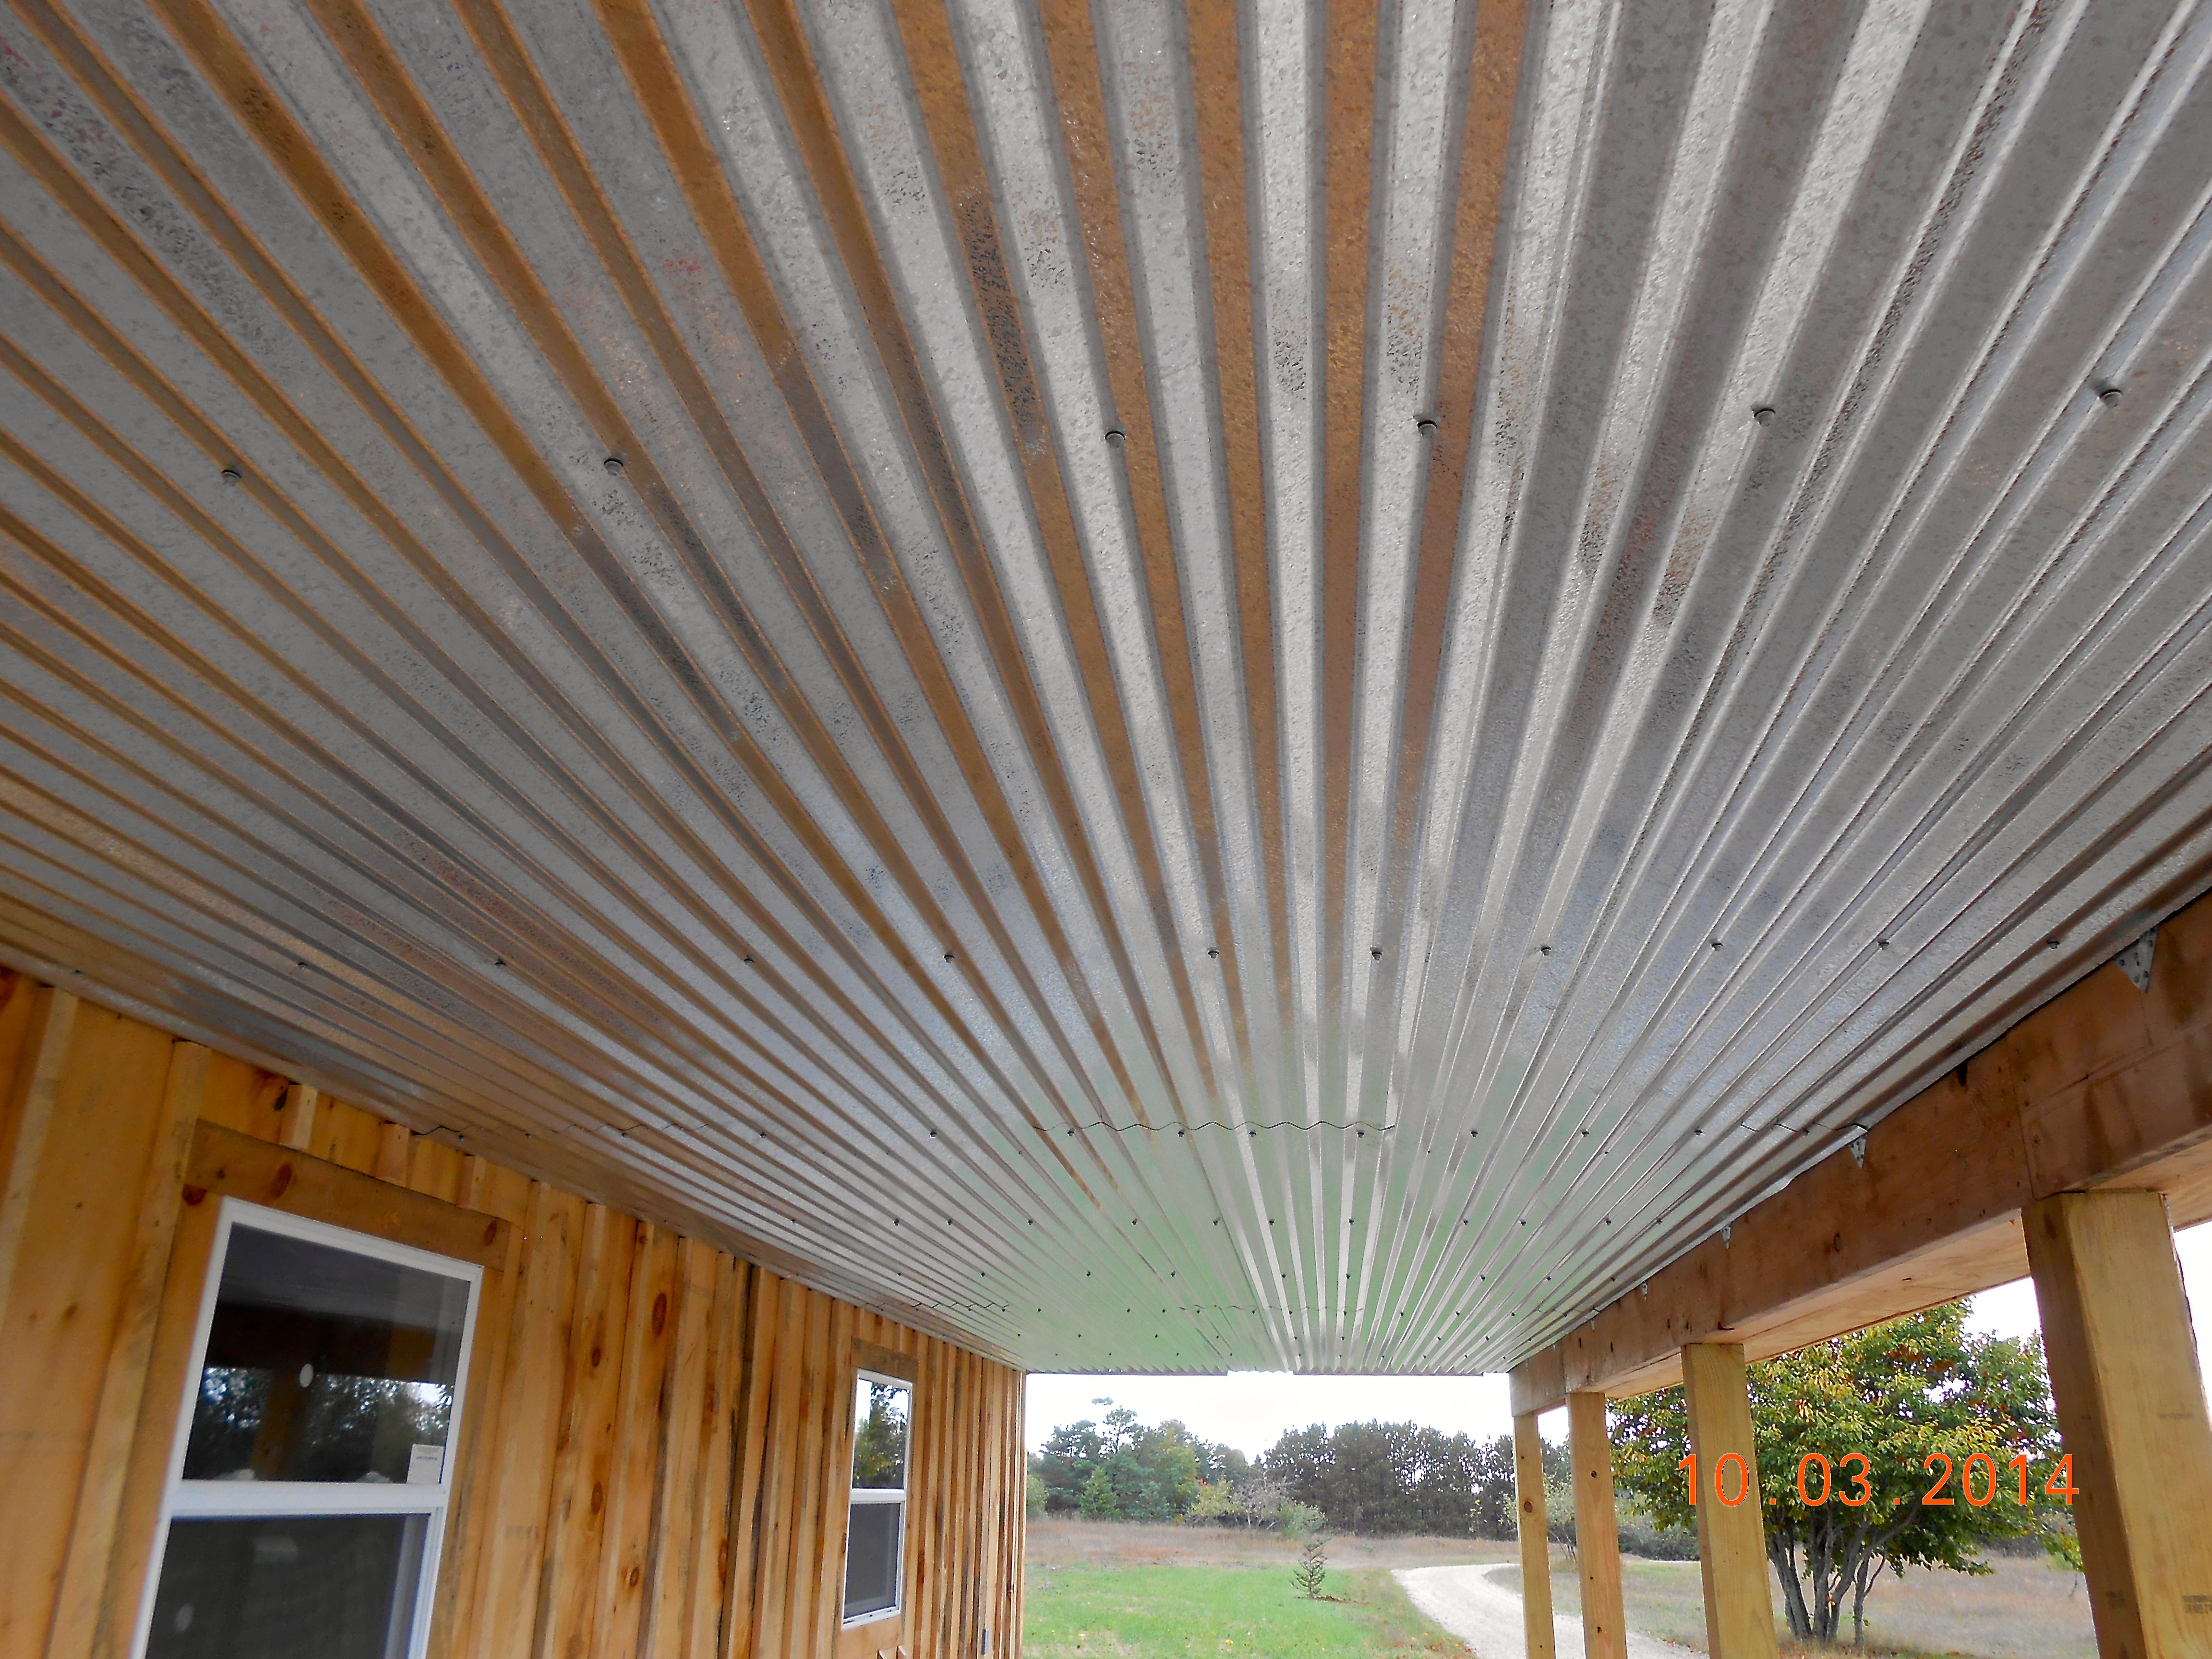 Galvanized Ceiling Galvanized Metal In 2019 Porch Ceiling inside measurements 4608 X 3456